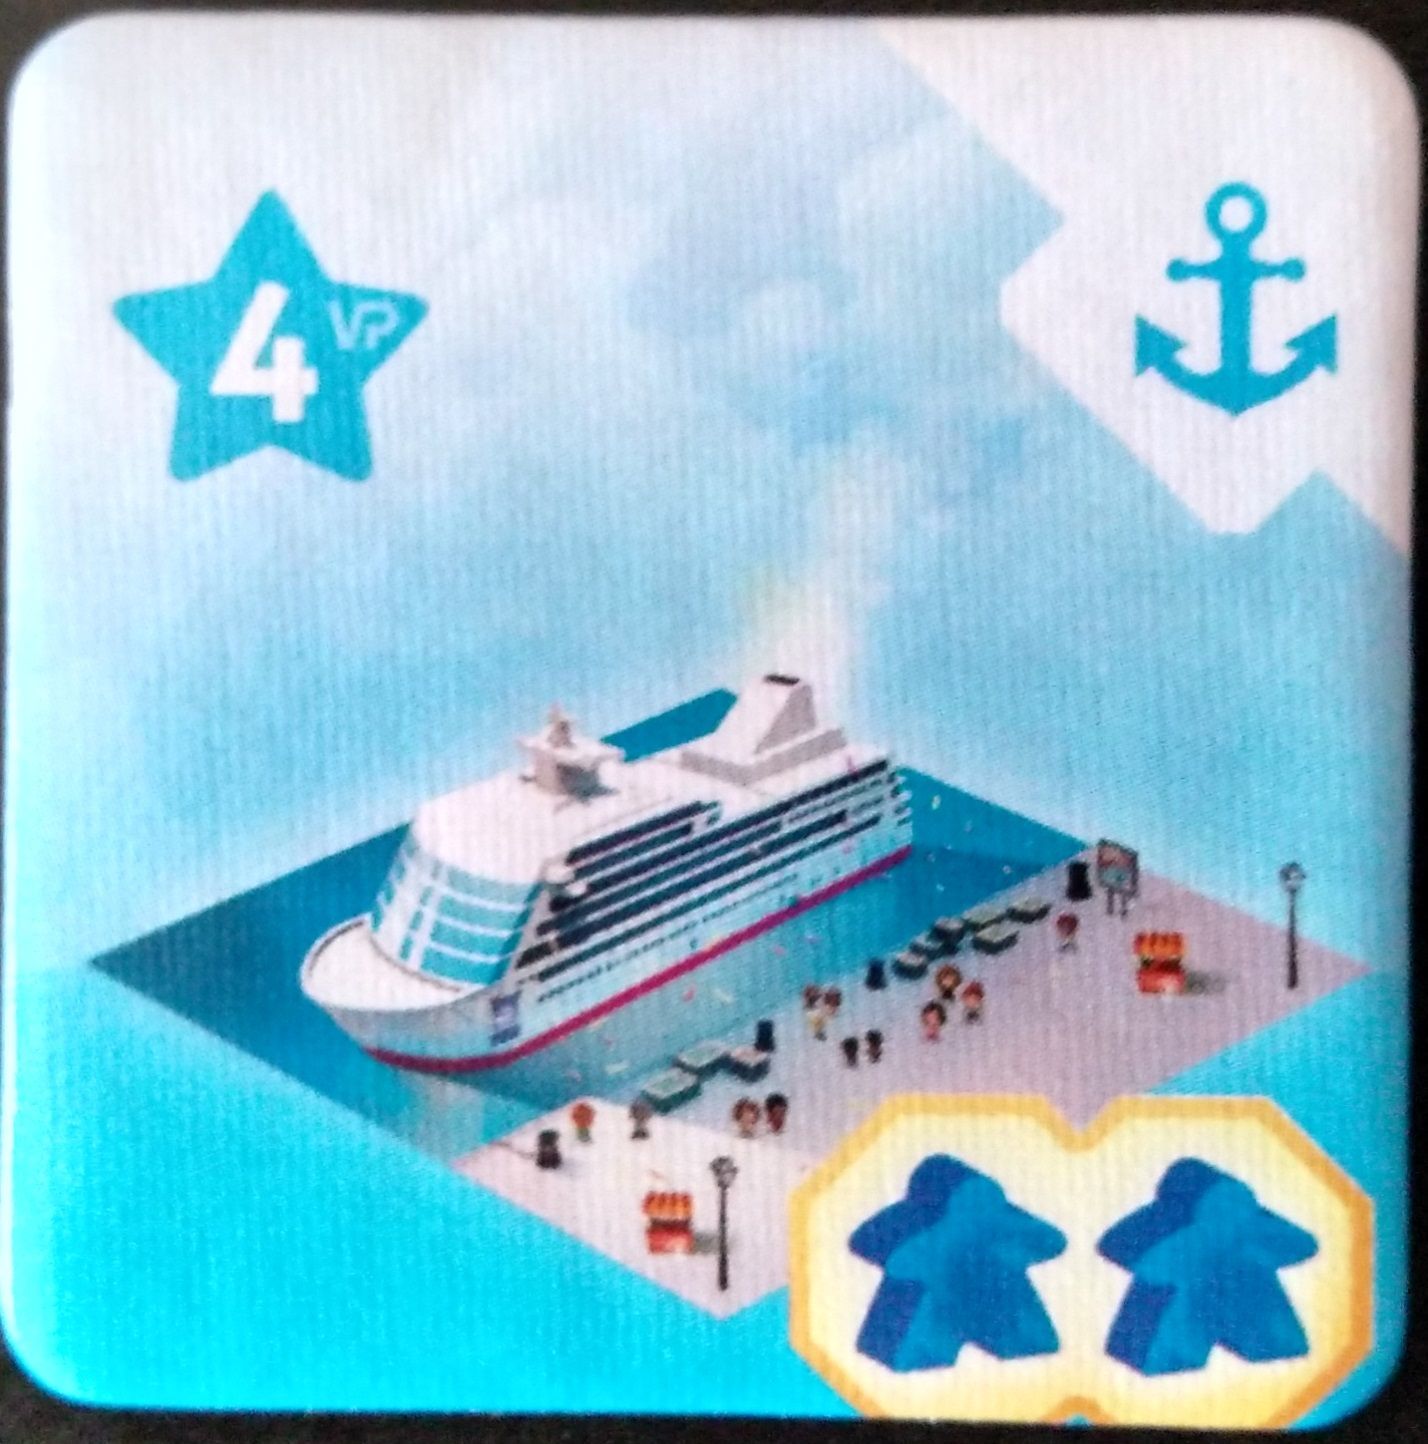 Quadropolis: The Cruise Ship